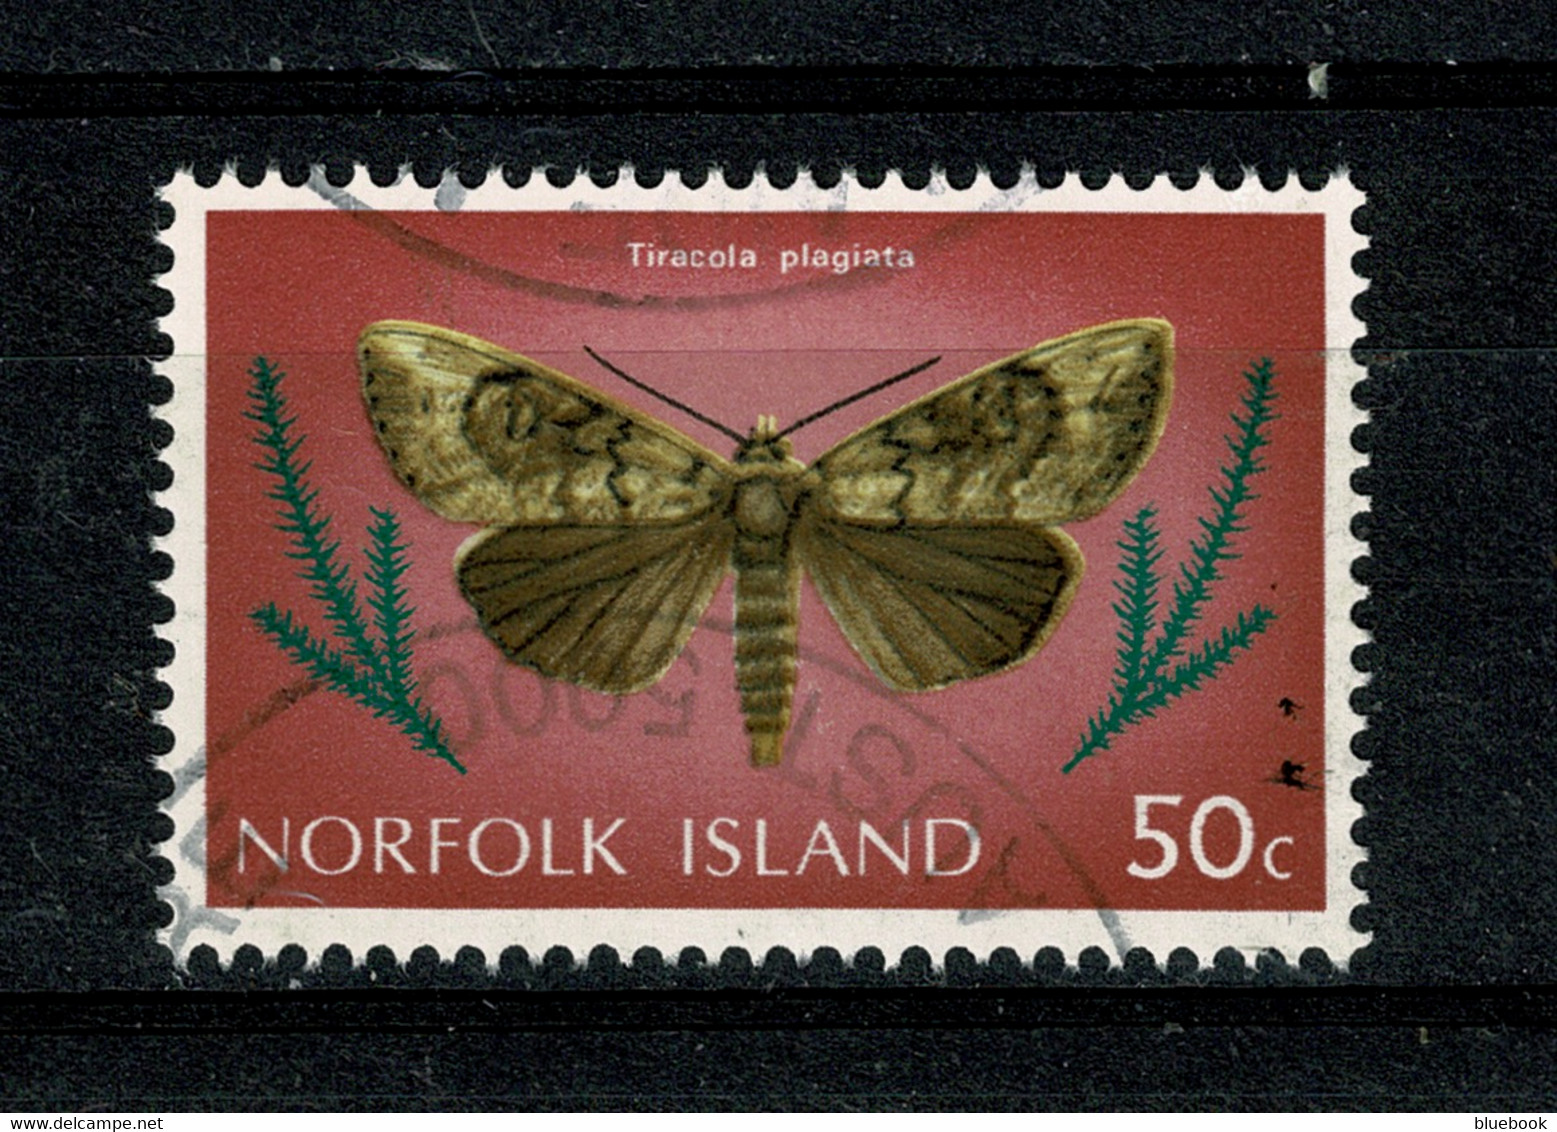 Ref 1458 - Norfolk Island 50c Used Stamp - SG 193 - Butterfly Butterflies & Moths Theme - Ile Norfolk